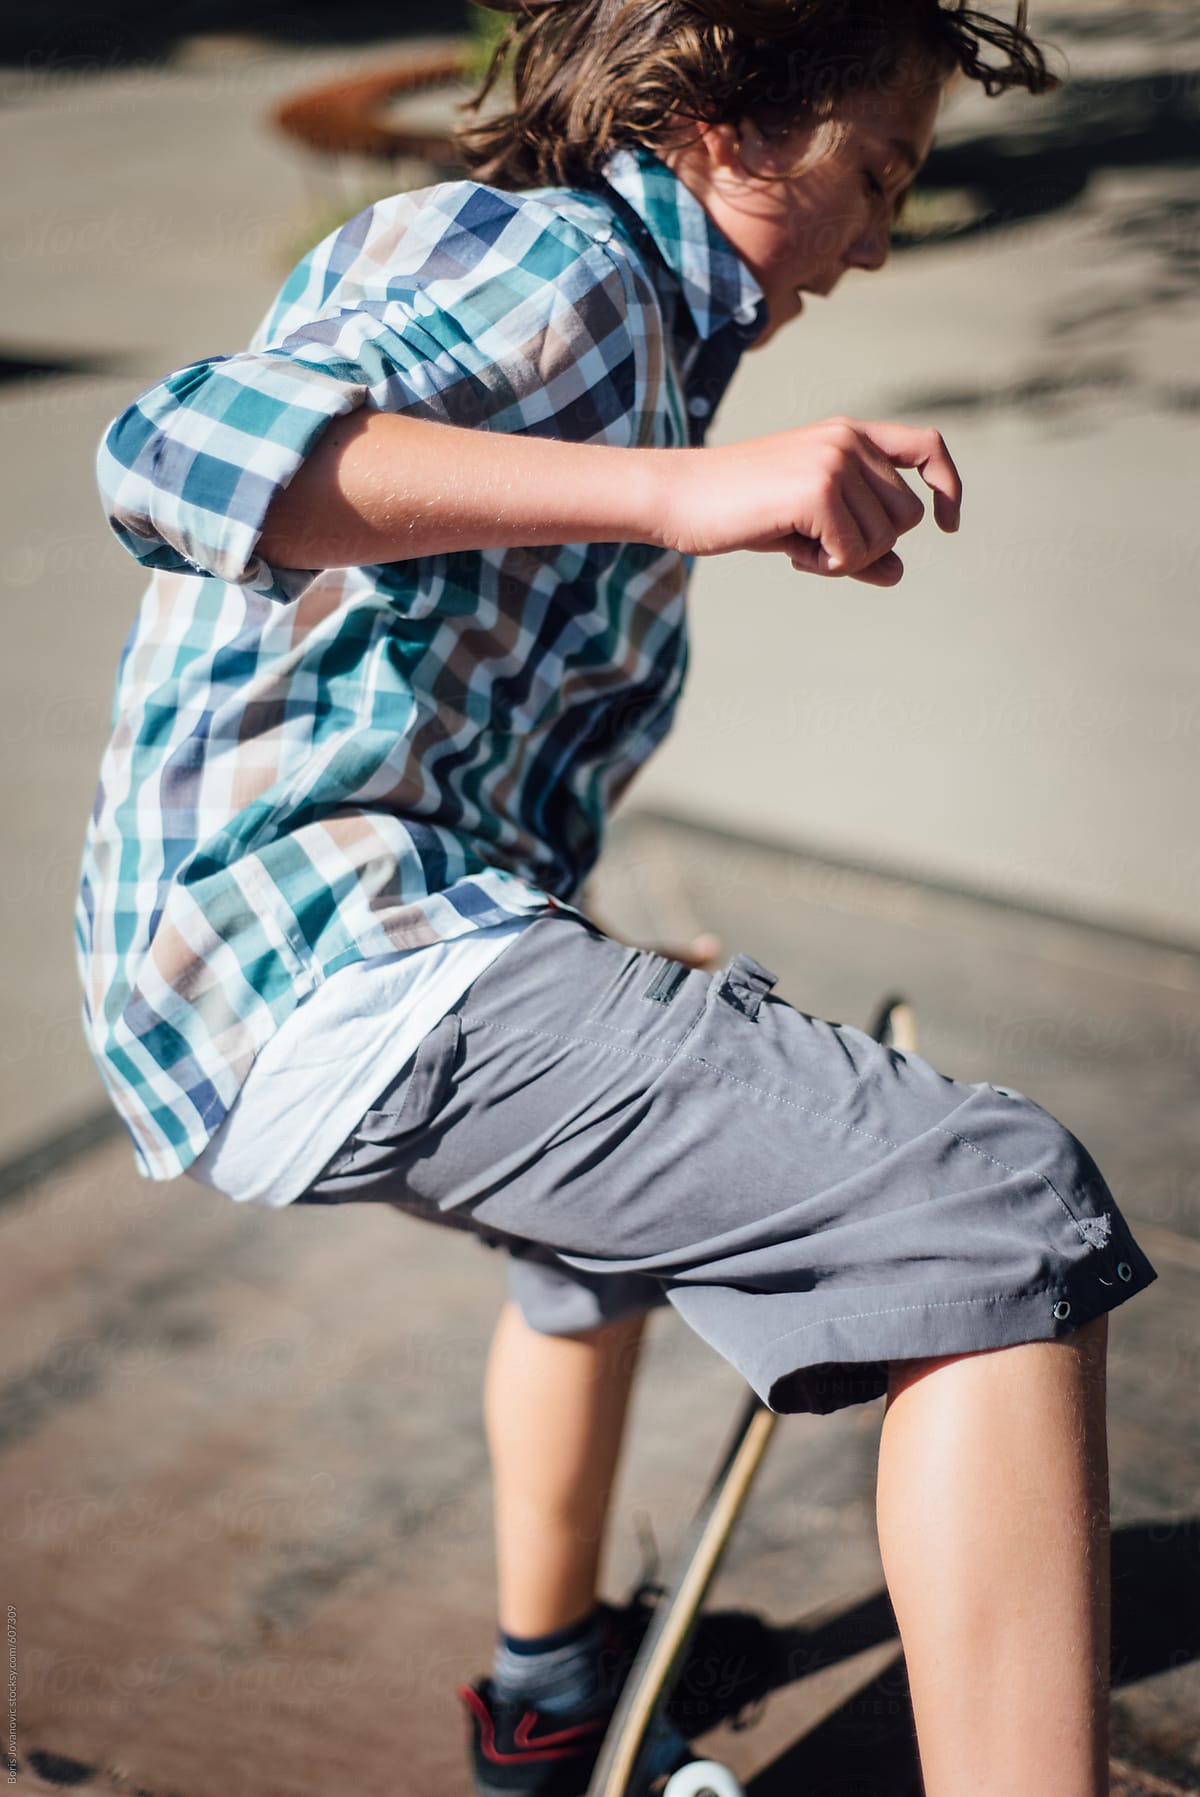 Young Boy Riding A Skateboard By Boris Jovanovic 8854